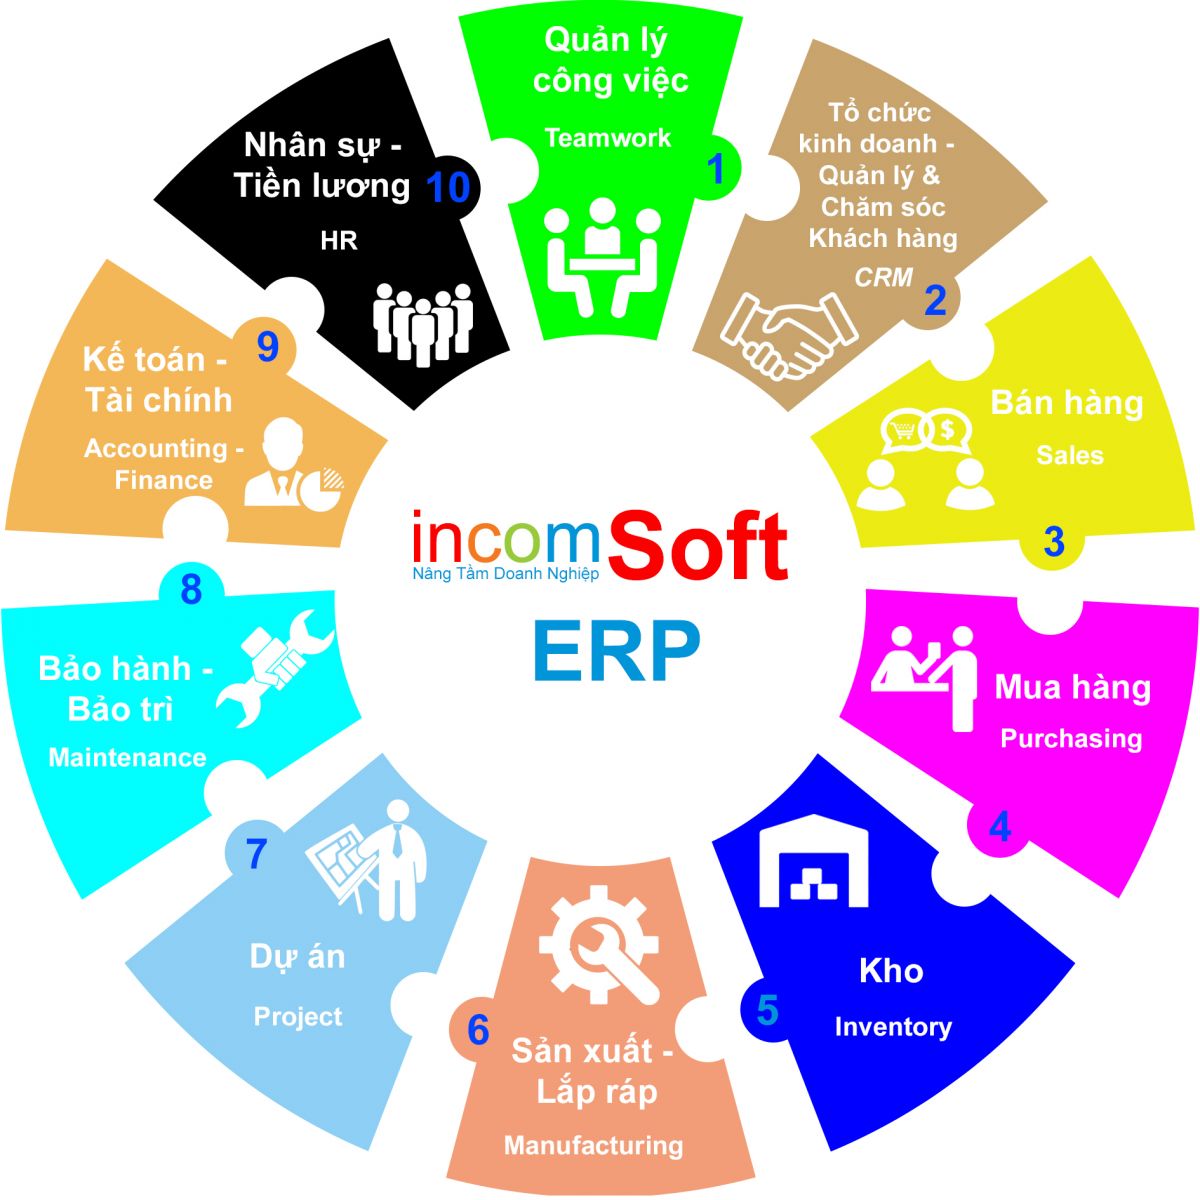 incomSoft provides ERP, DMS, CRM solution